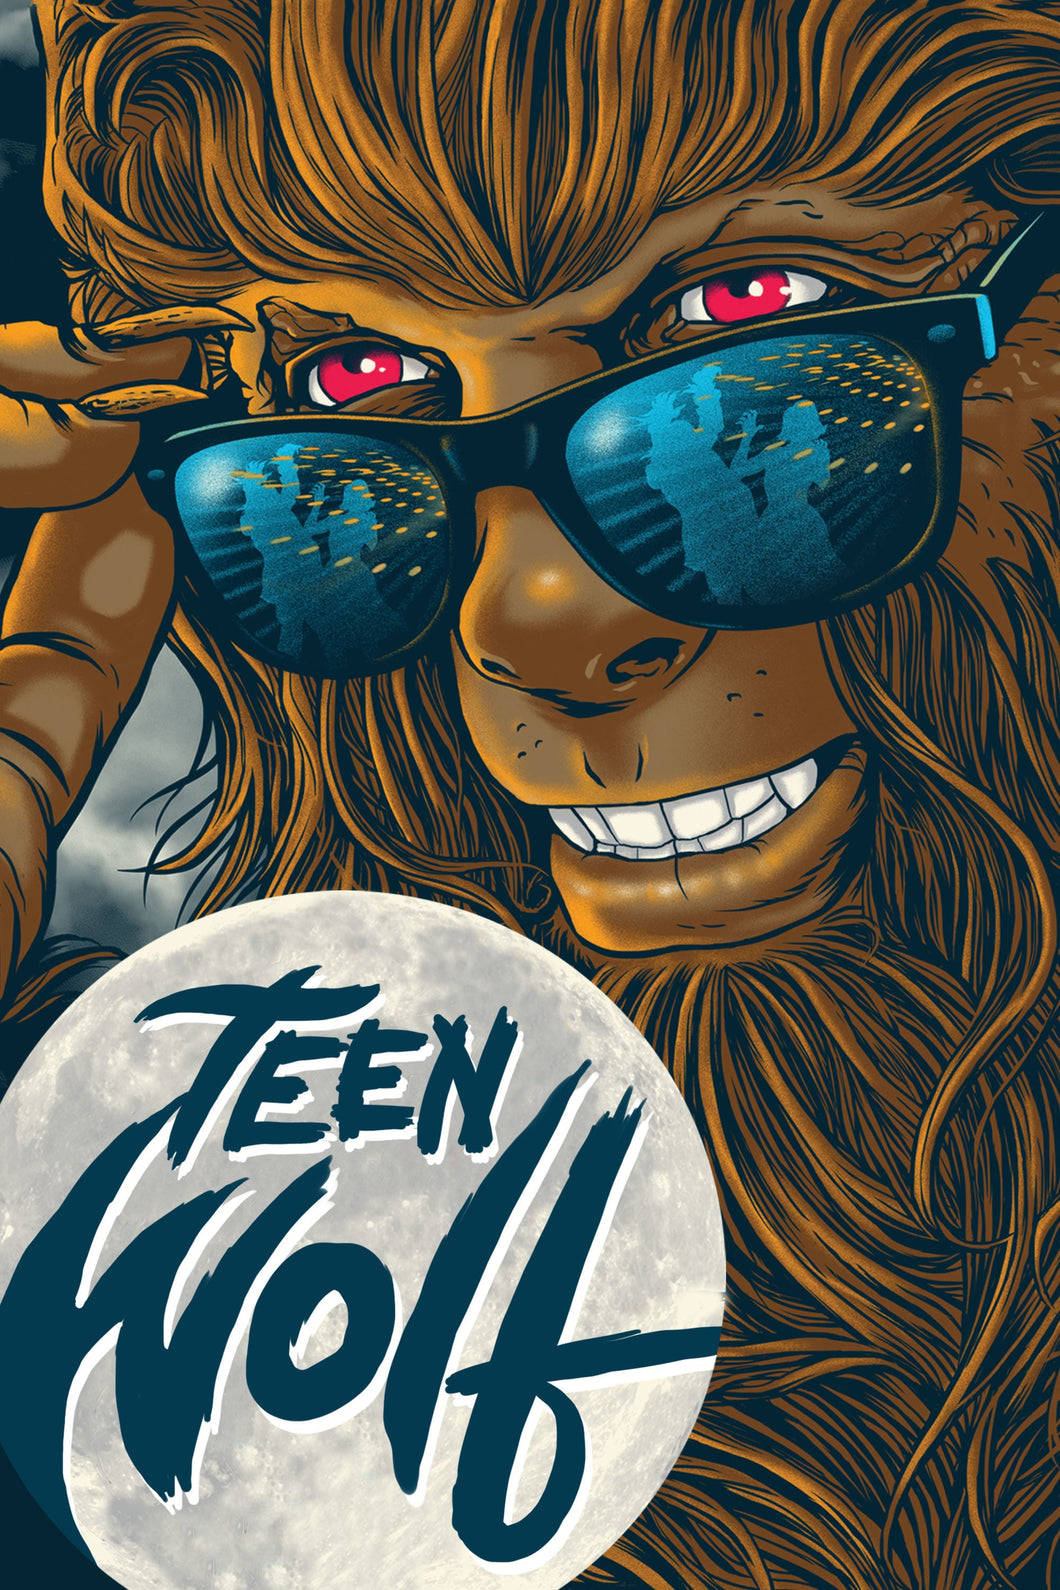 Teenwolf (1985) V2 Movie Poster Framed or Unframed Glossy Poster Free UK Shipping!!!